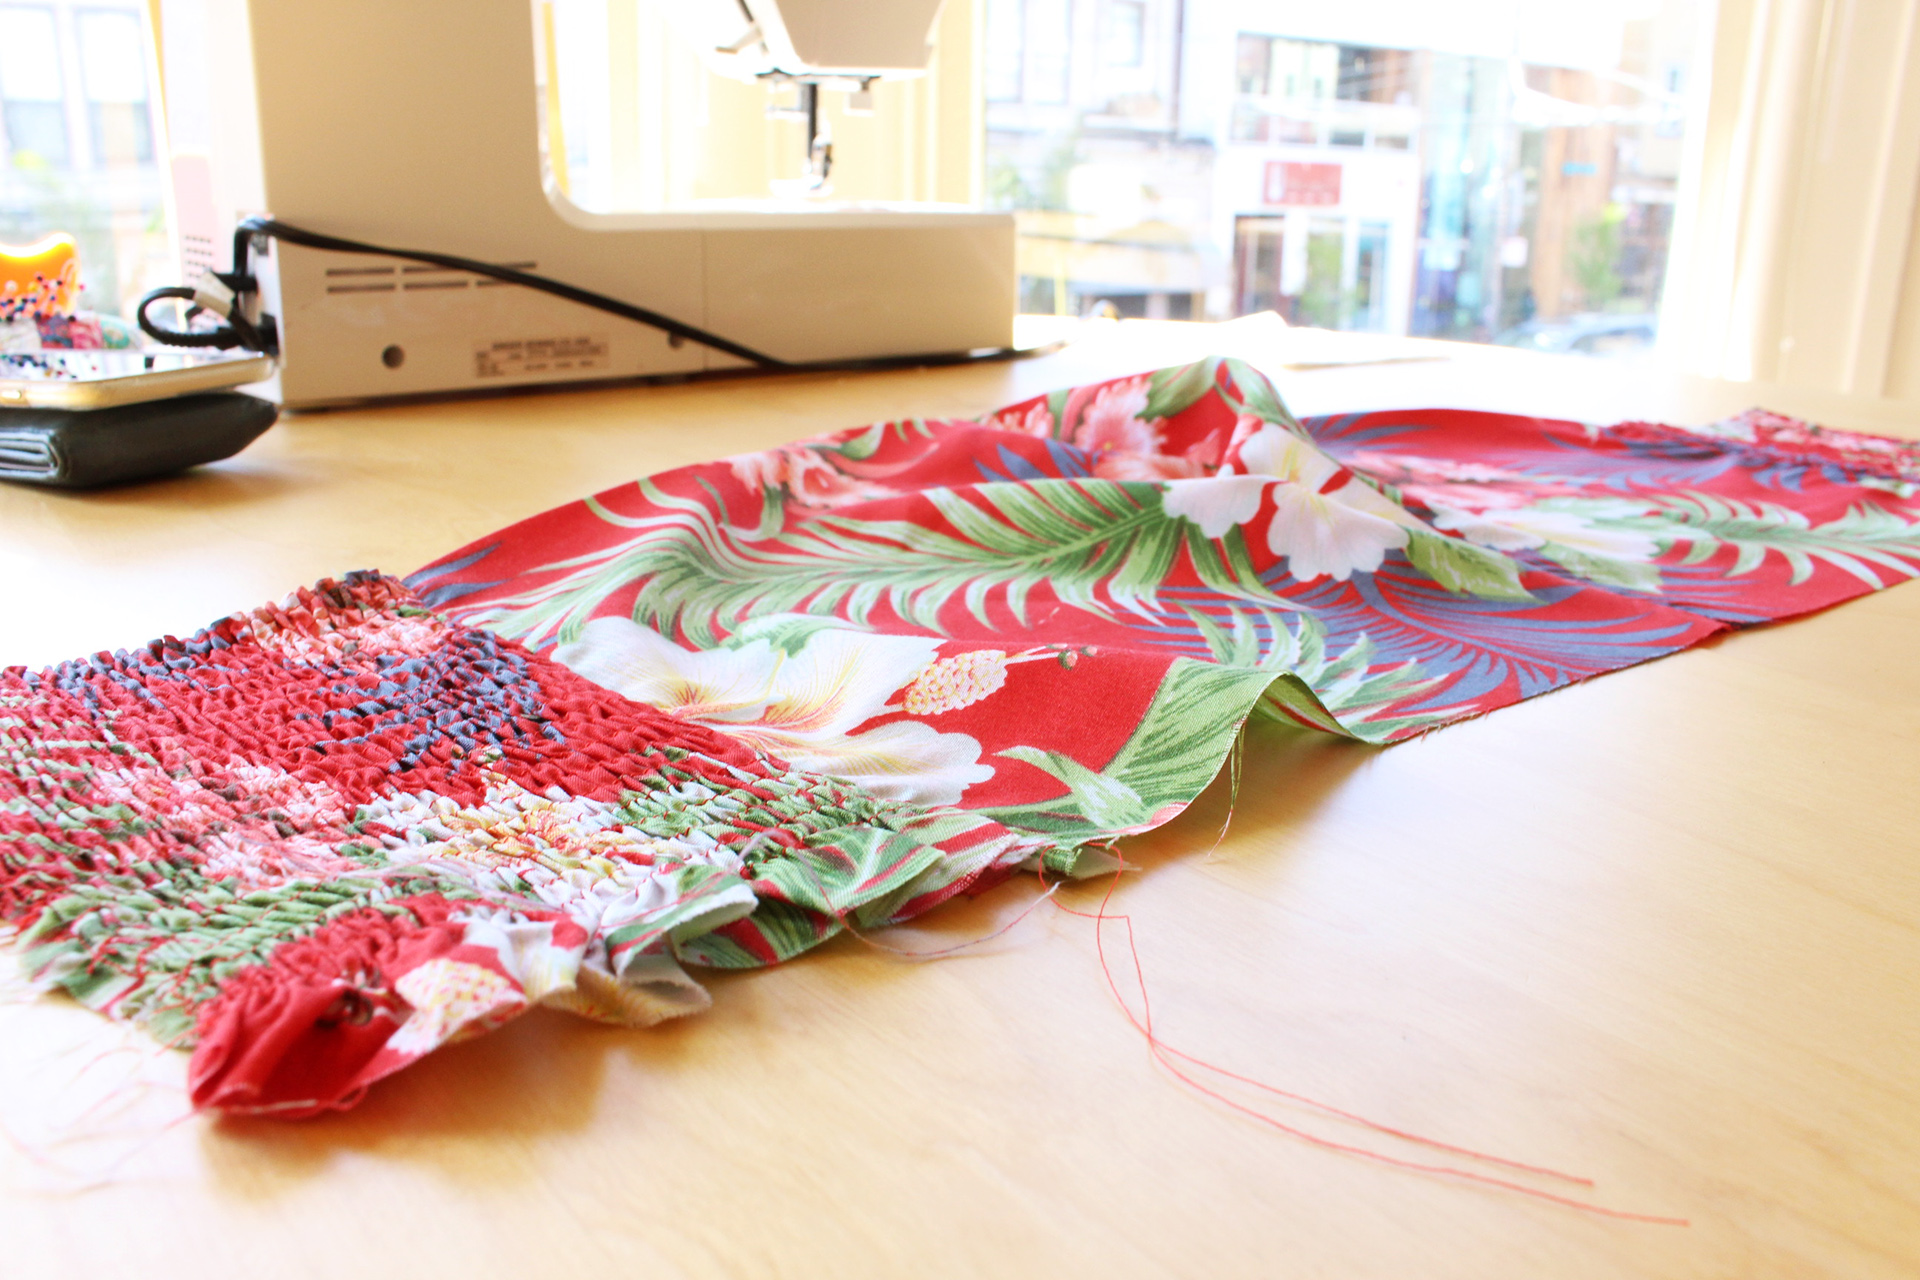 Gertie Tiki Dress, Gertie's New Book for Better Sewing, in progress bodice | @vintageontap